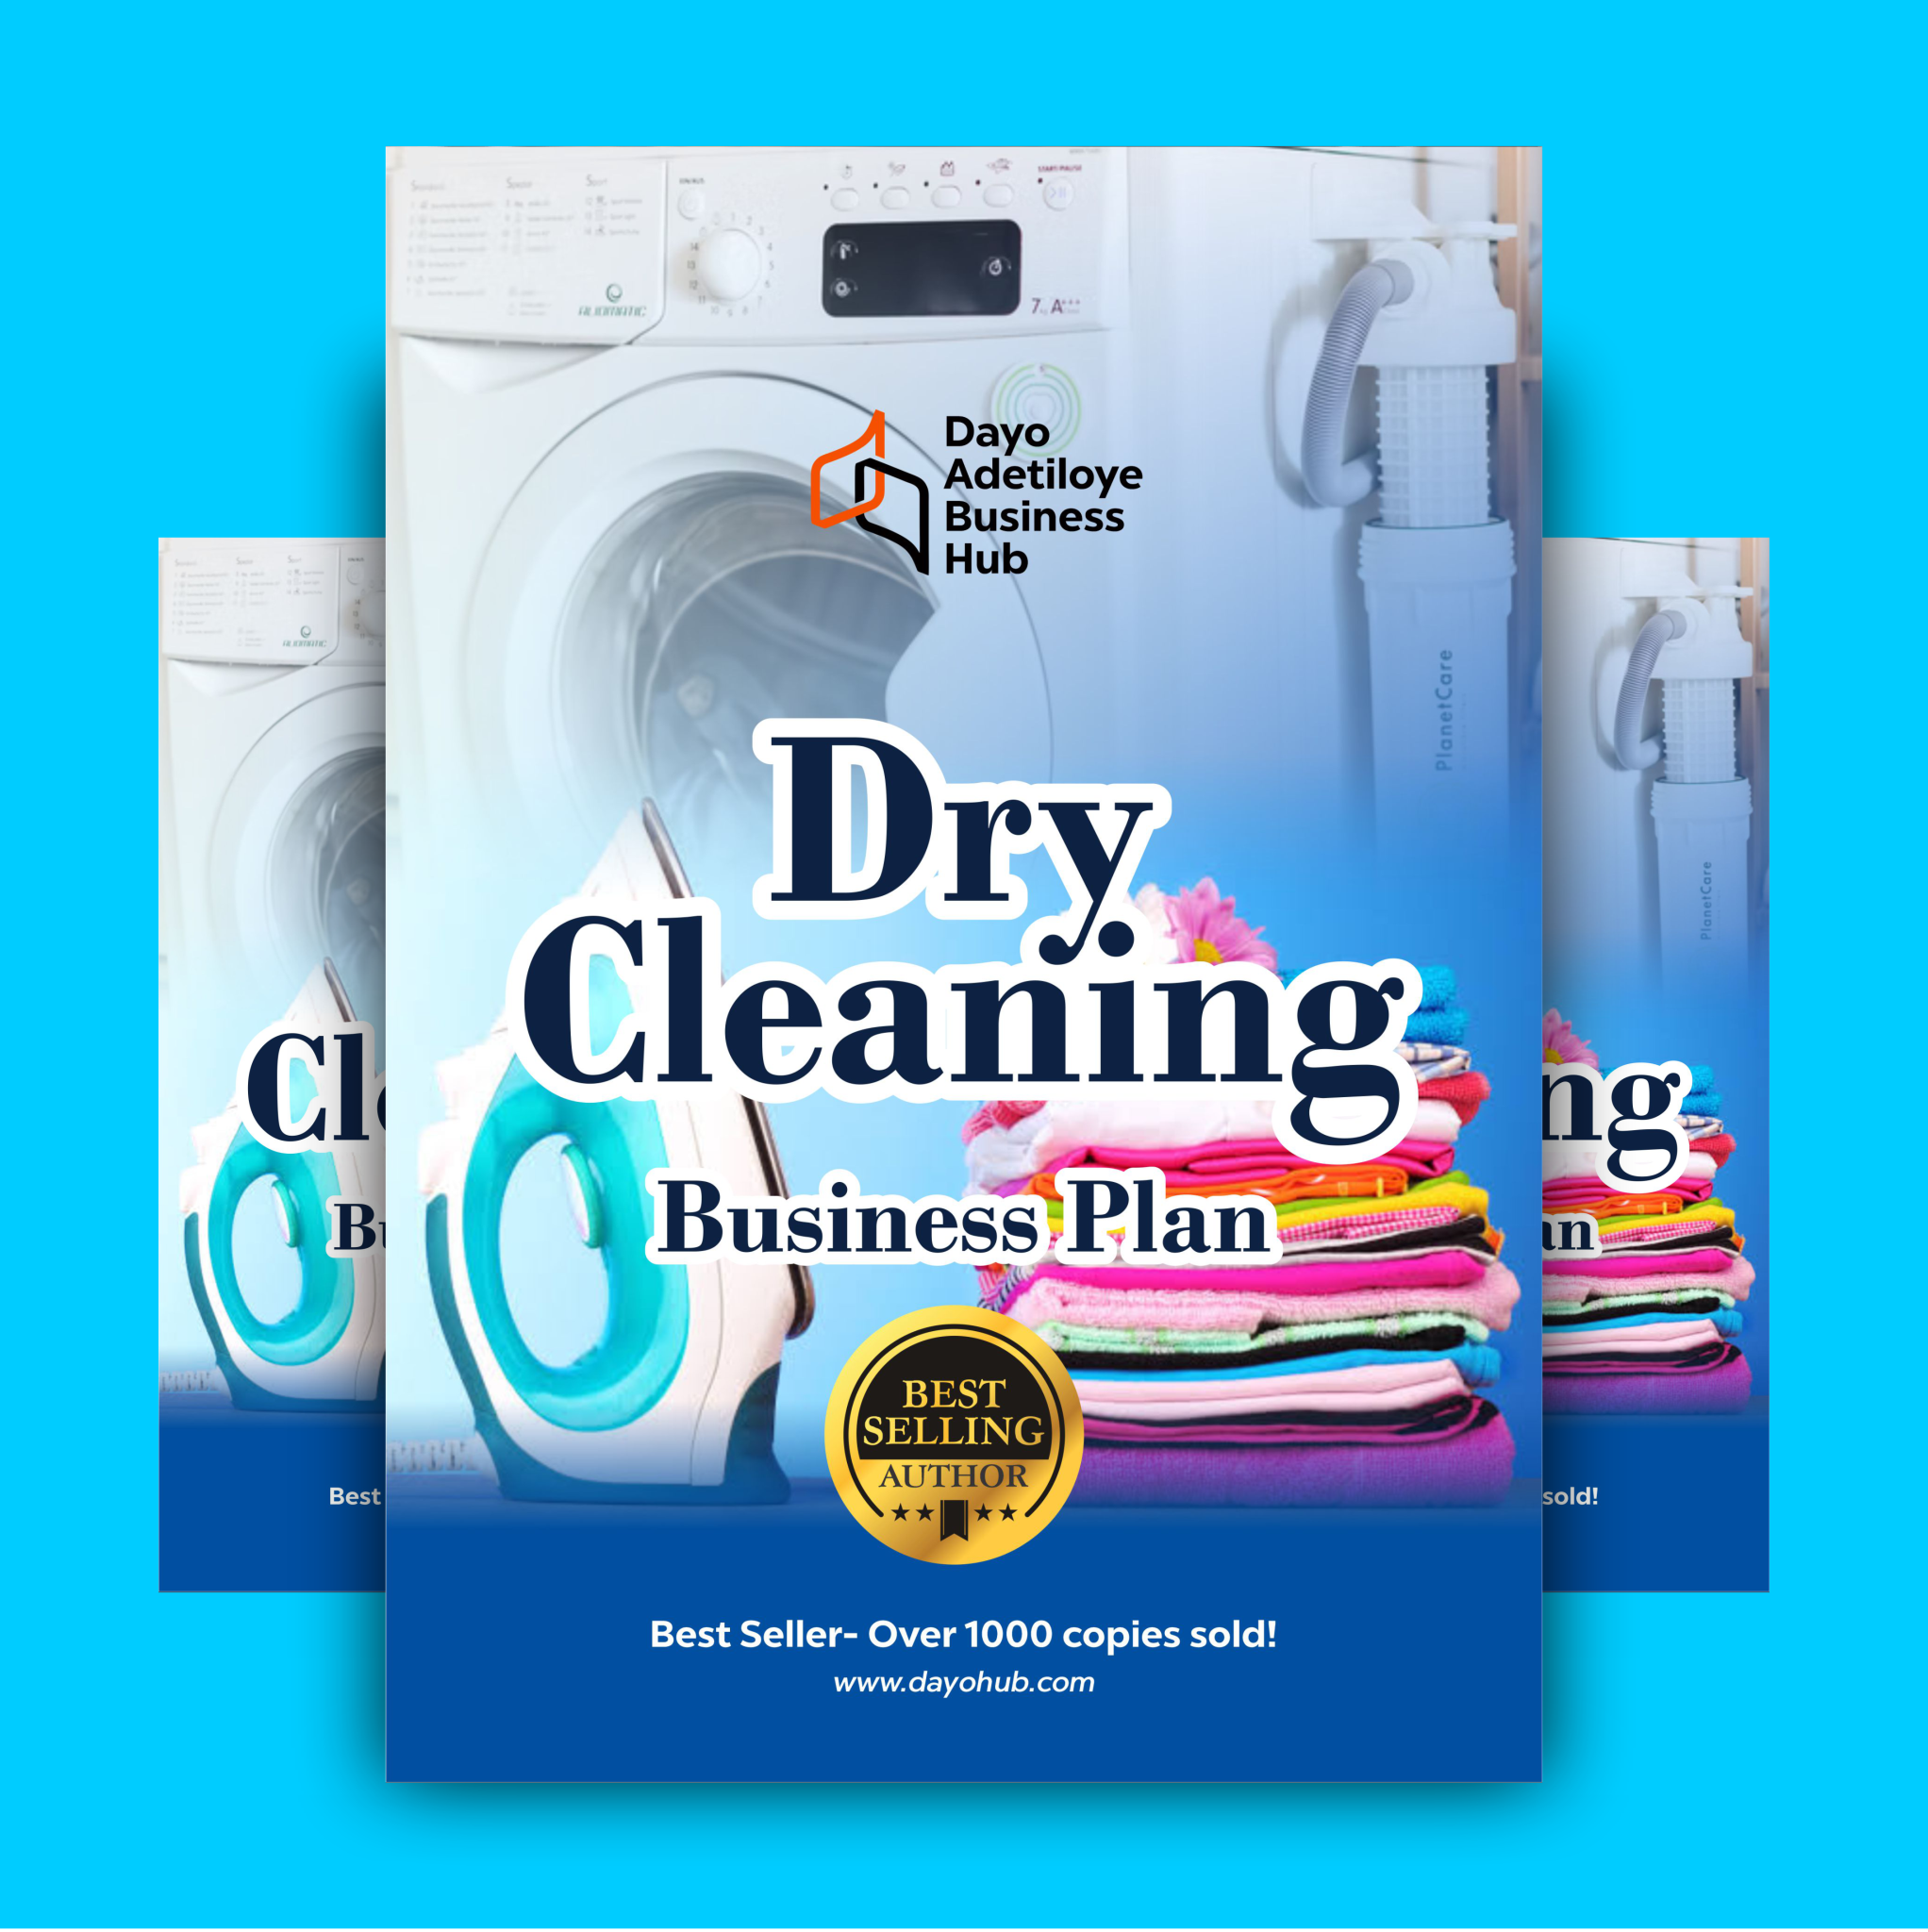 free laundry business plan in nigeria pdf